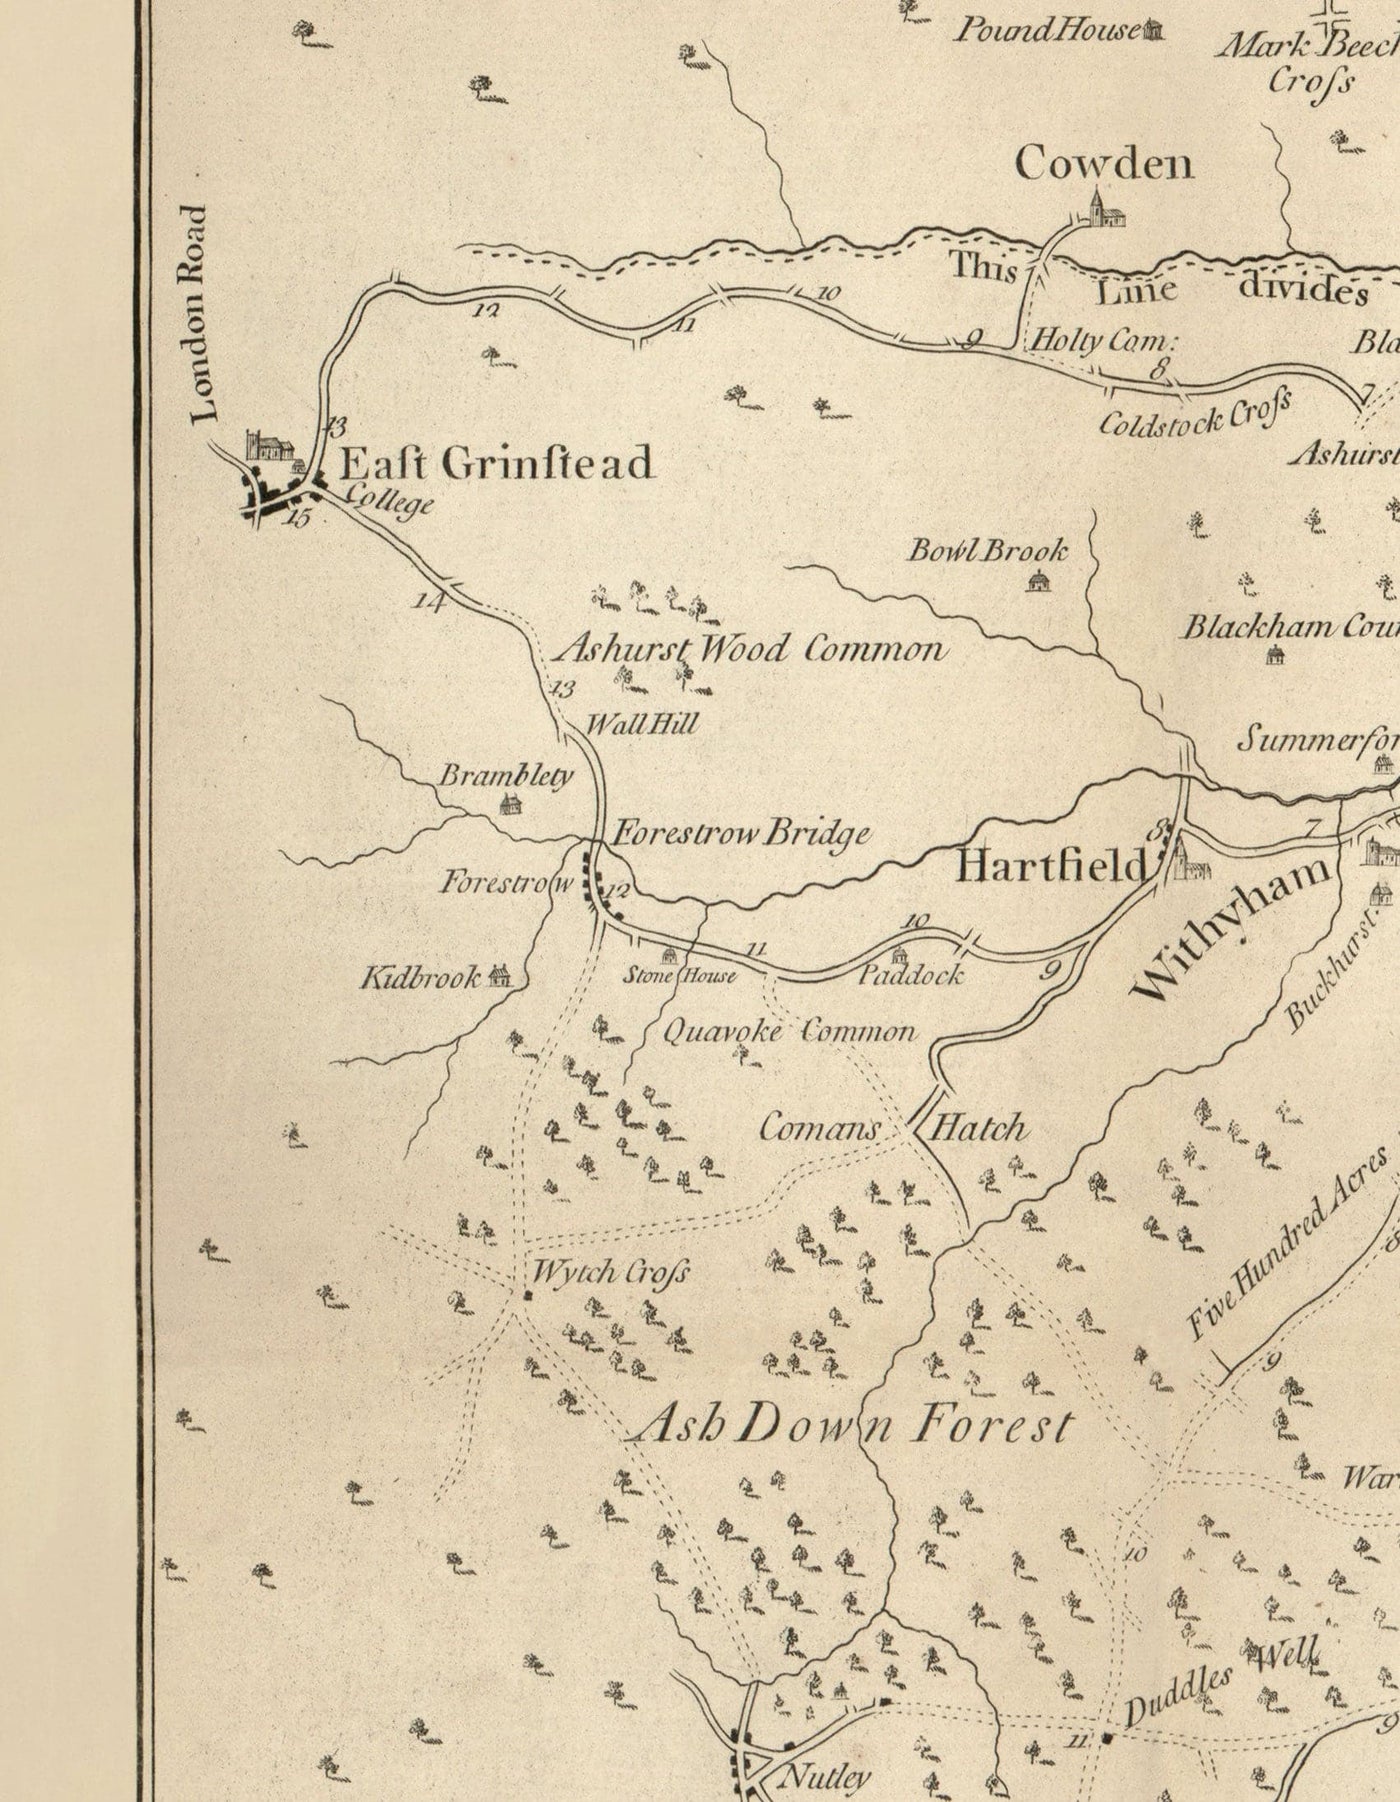 Old Map of Tunbridge Wells and 14 miles around by Jasper Sprange, 1802 - Kent, East Sussex